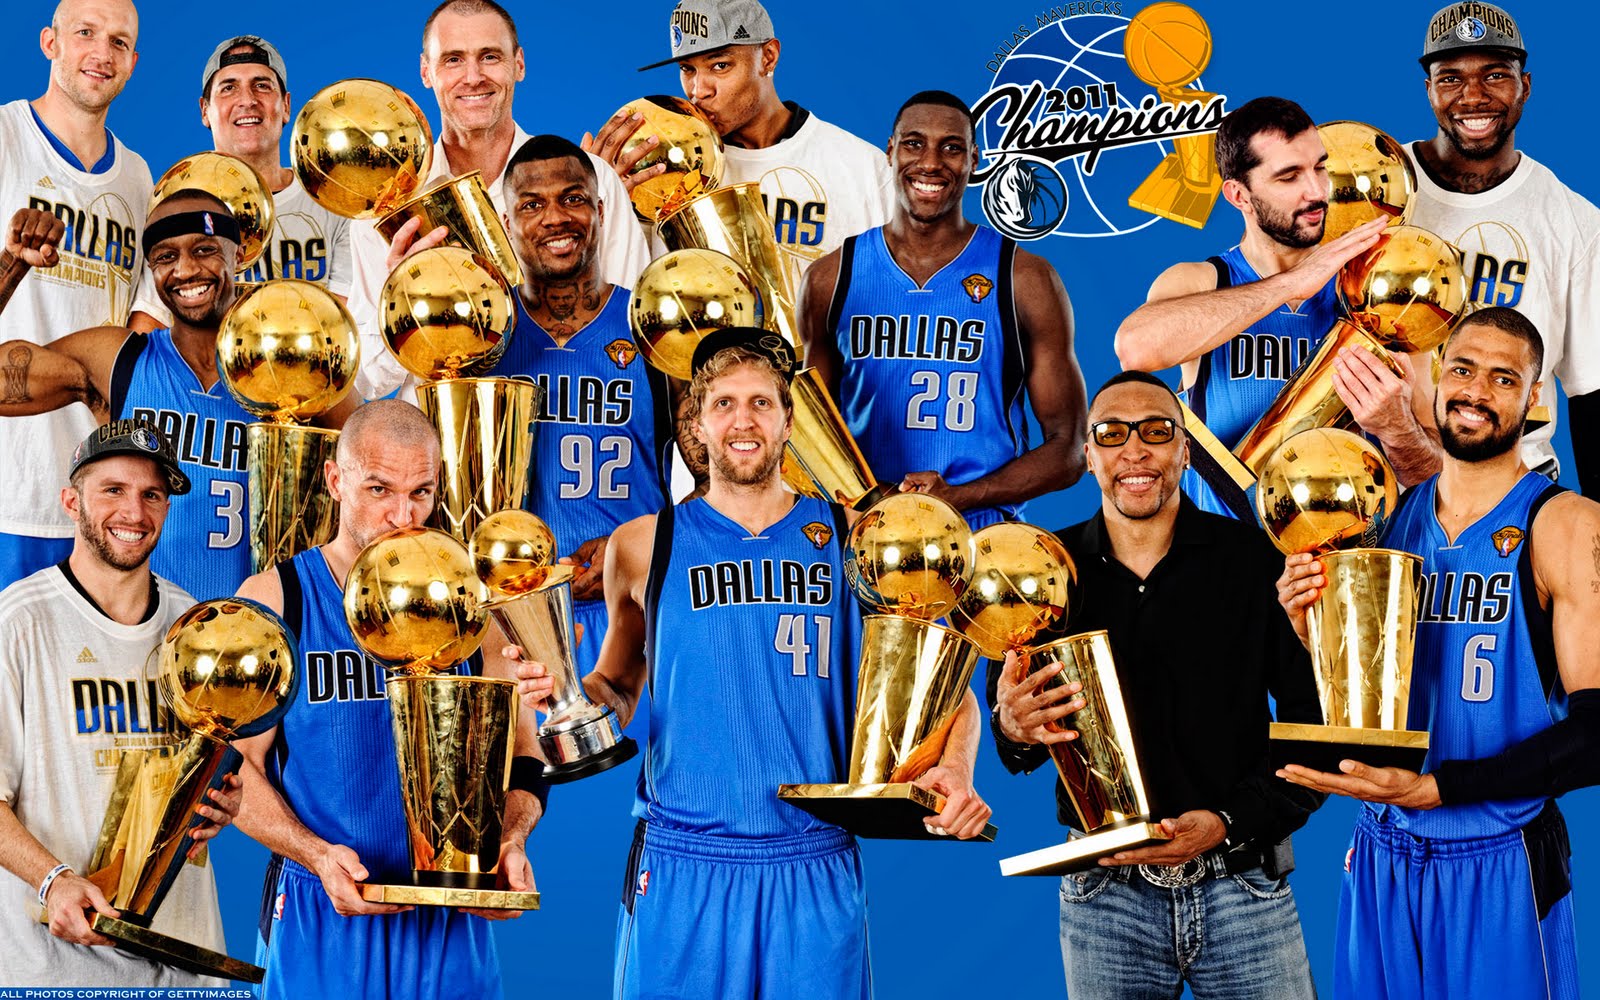 https://blogger.googleusercontent.com/img/b/R29vZ2xl/AVvXsEi5PrU5tj81S7sloegvm3VAuj11TD5BFncPigdg0yLRTFJ7gcIRzzD1LzHV5Or6C4KKf5DLx5xYjGyIEzcv5CgAGLu4WOLJiEacxMQePJGWv3hmvkSUzwDV55nlKFqSIC6e2rBzLJxgdqA/s1600/Dallas-Mavericks-2011-Players-With-Trophies-Widescreen-Wallpaper-BasketWallpapers.com-.jpg